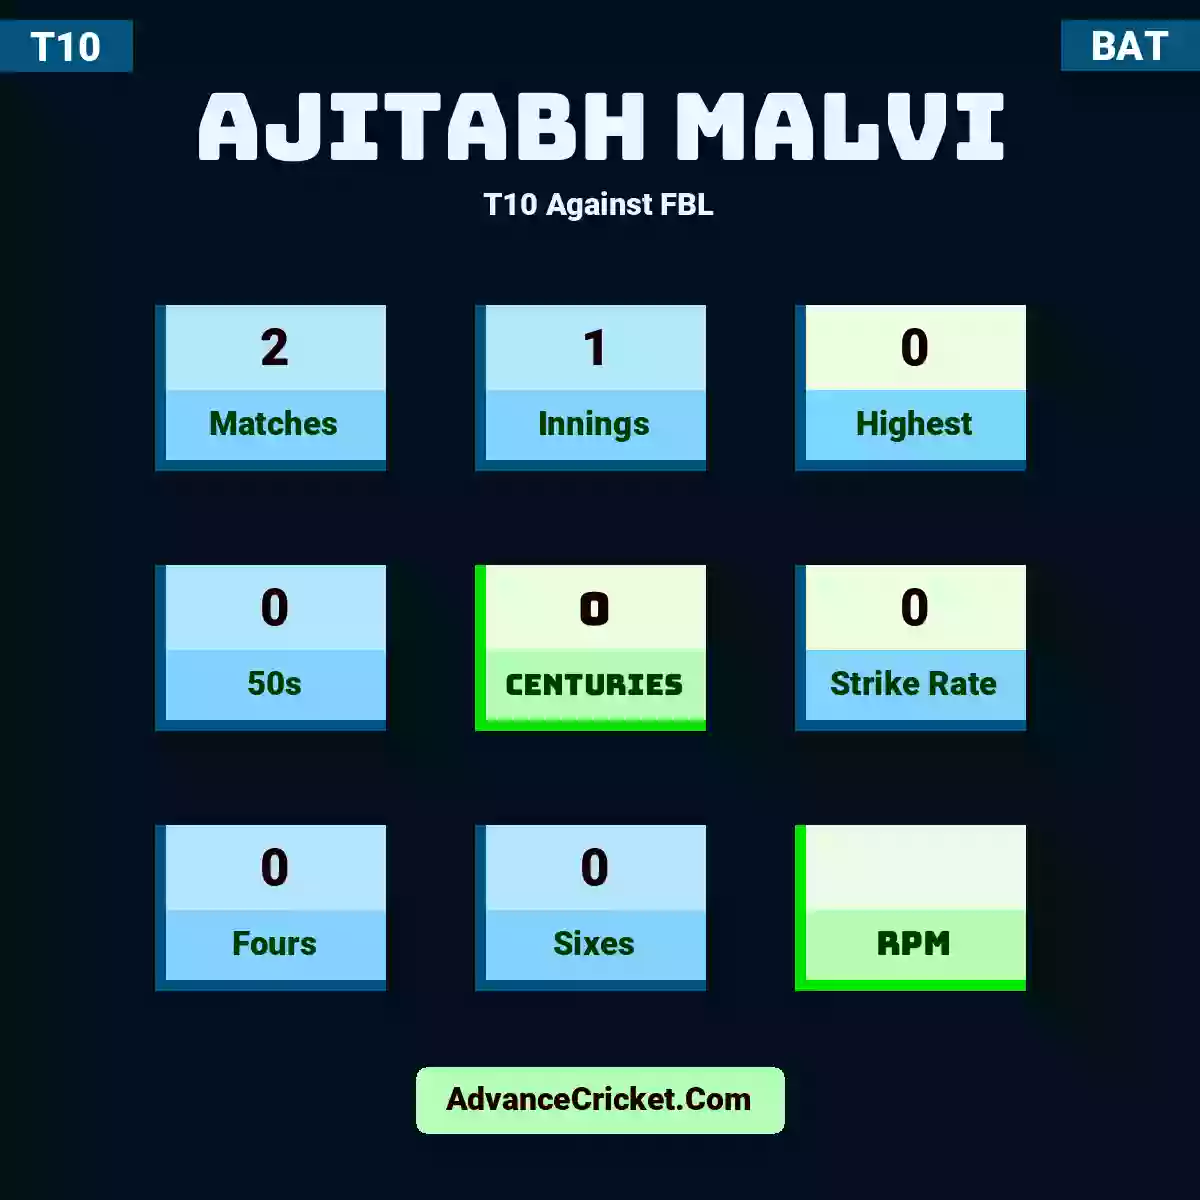 Ajitabh Malvi T10  Against FBL, Ajitabh Malvi played 2 matches, scored 0 runs as highest, 0 half-centuries, and 0 centuries, with a strike rate of 0. A.Malvi hit 0 fours and 0 sixes.